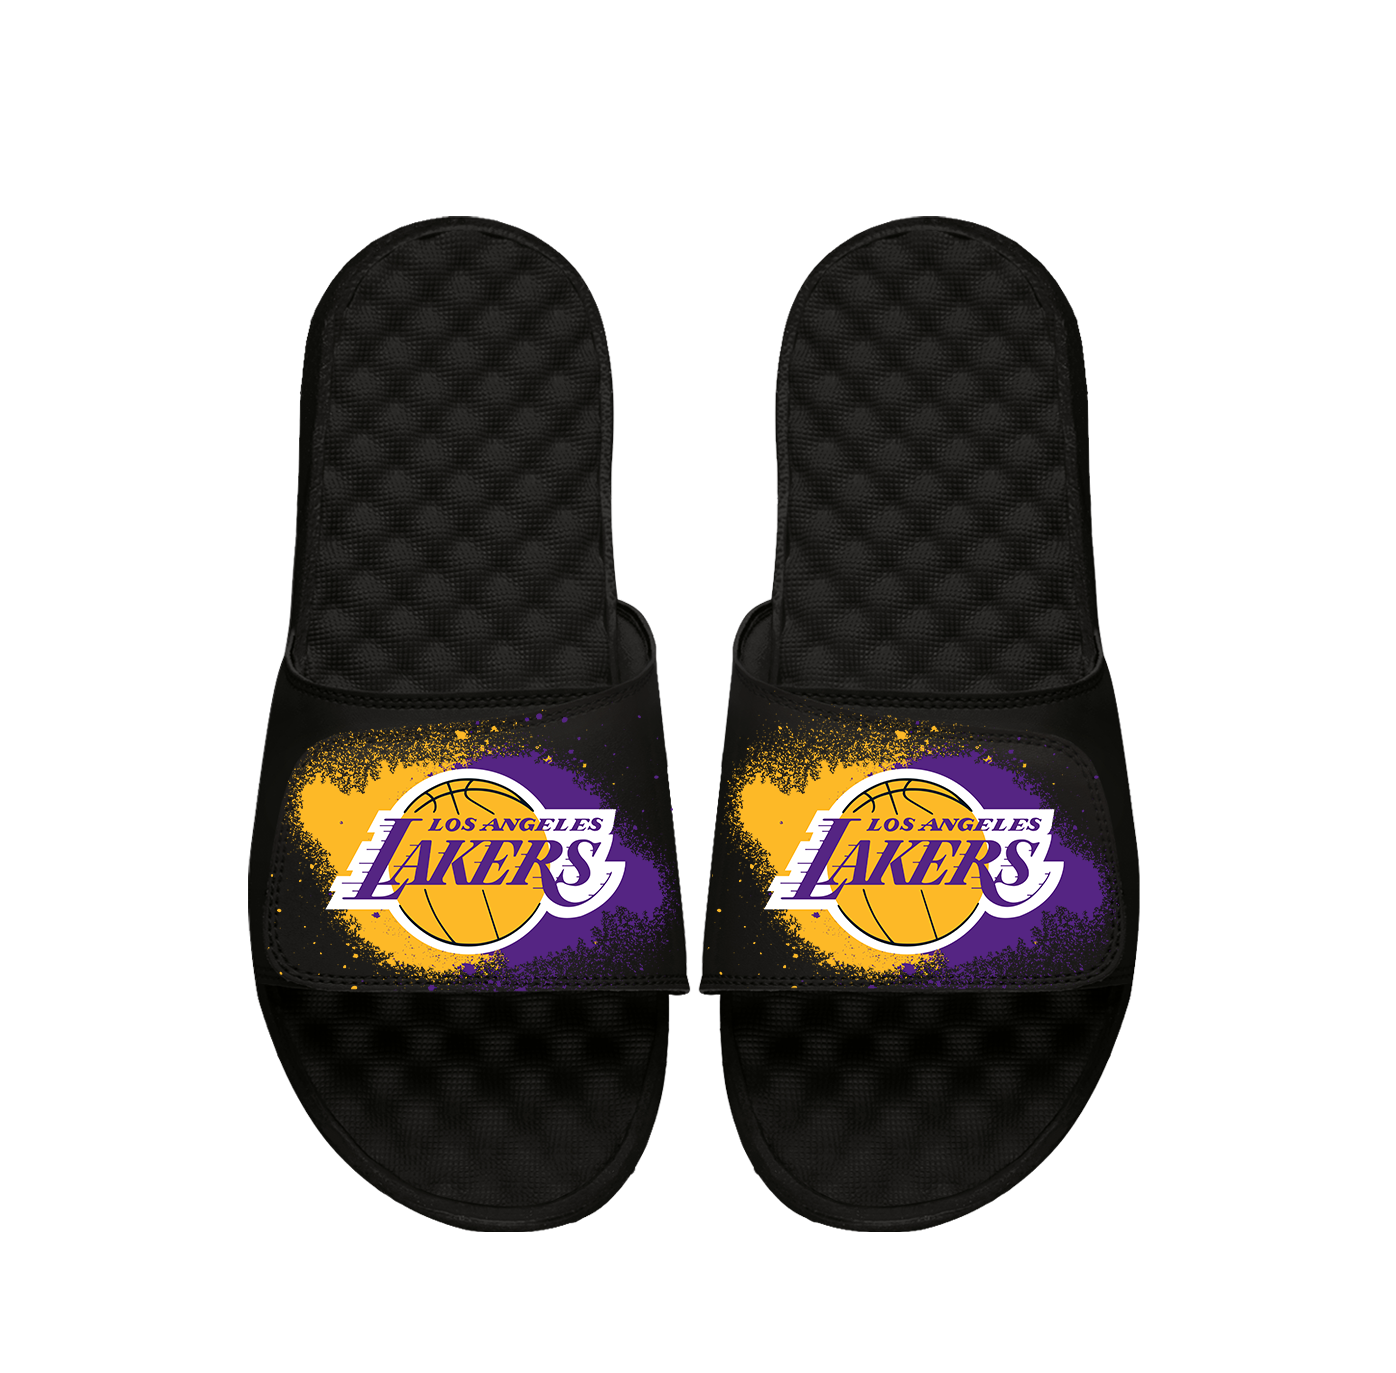 La Lakers Spray Paint Slides